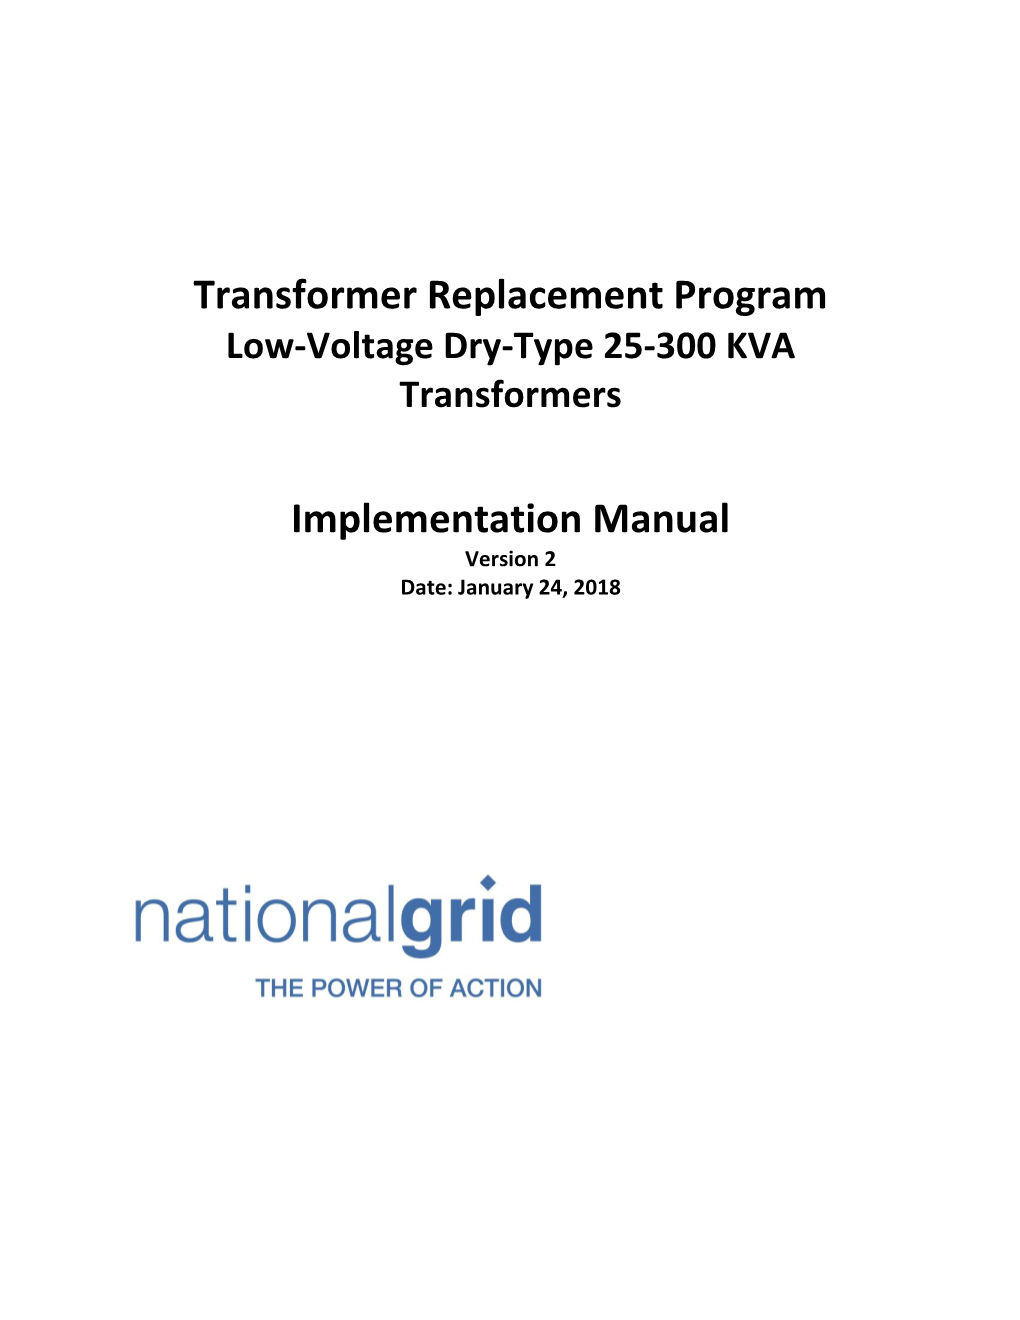 Transformer Replacement Program Implementation Manual I